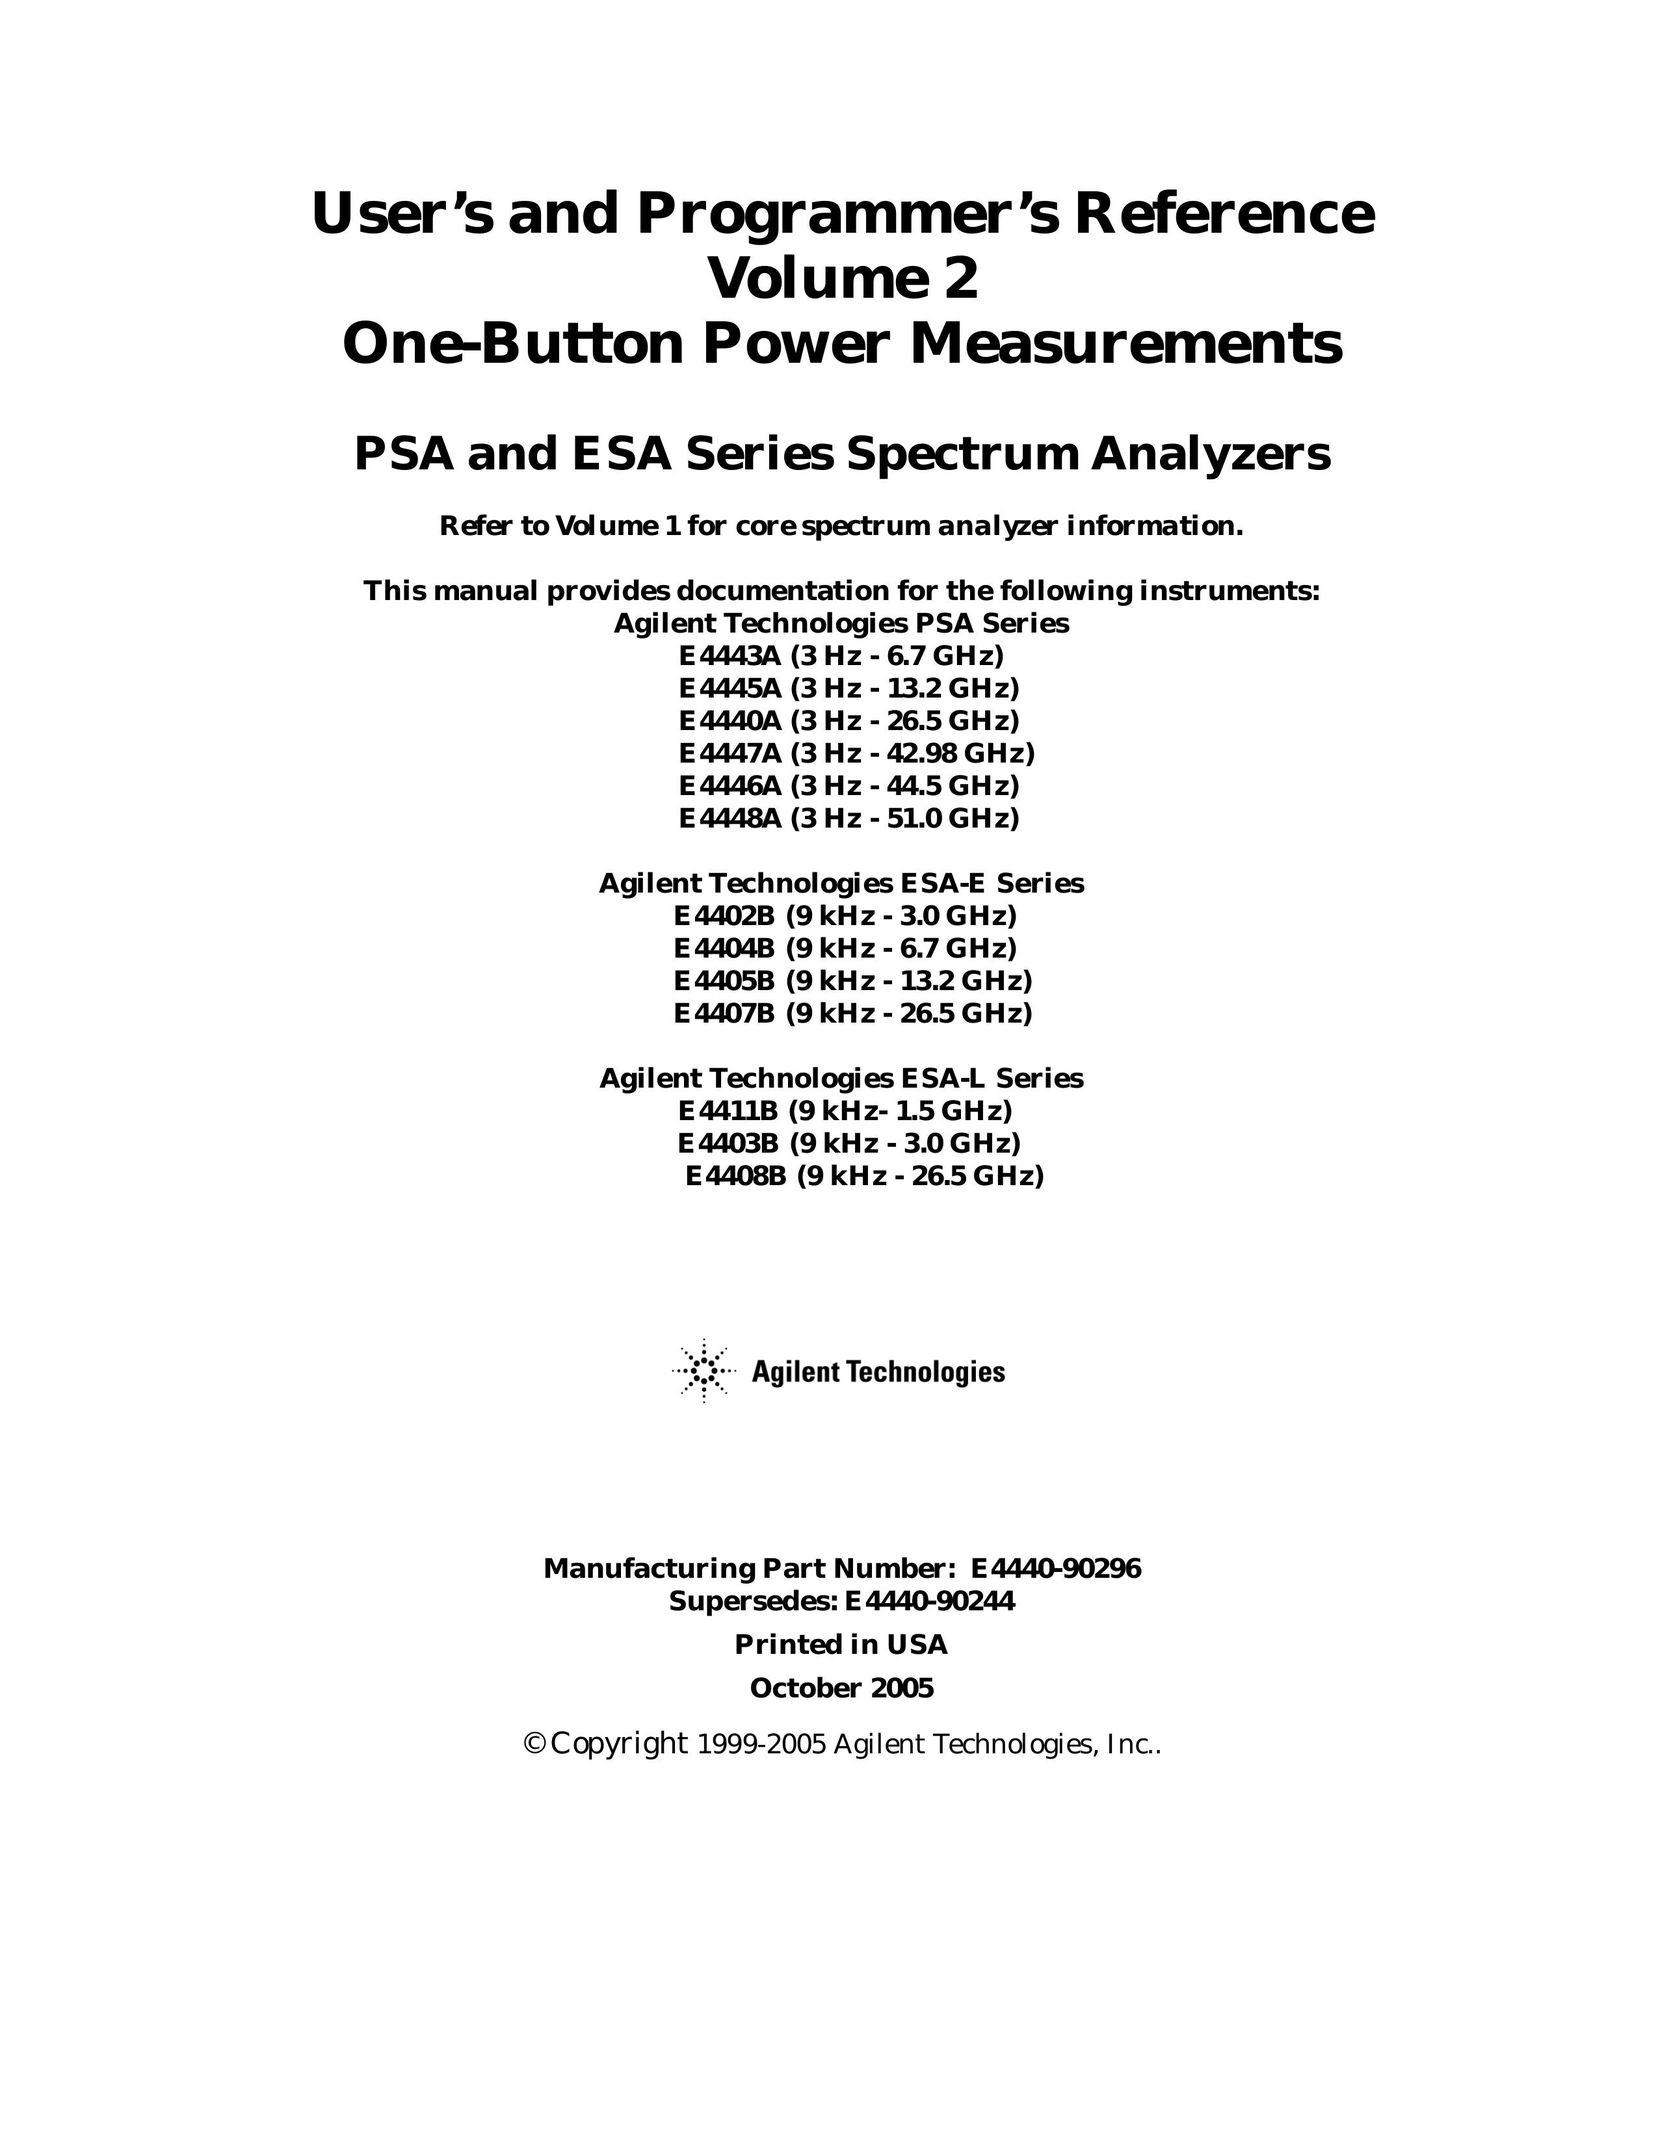 Agilent Technologies E4443A(3HZ-6.7GHZ) TV Converter Box User Manual